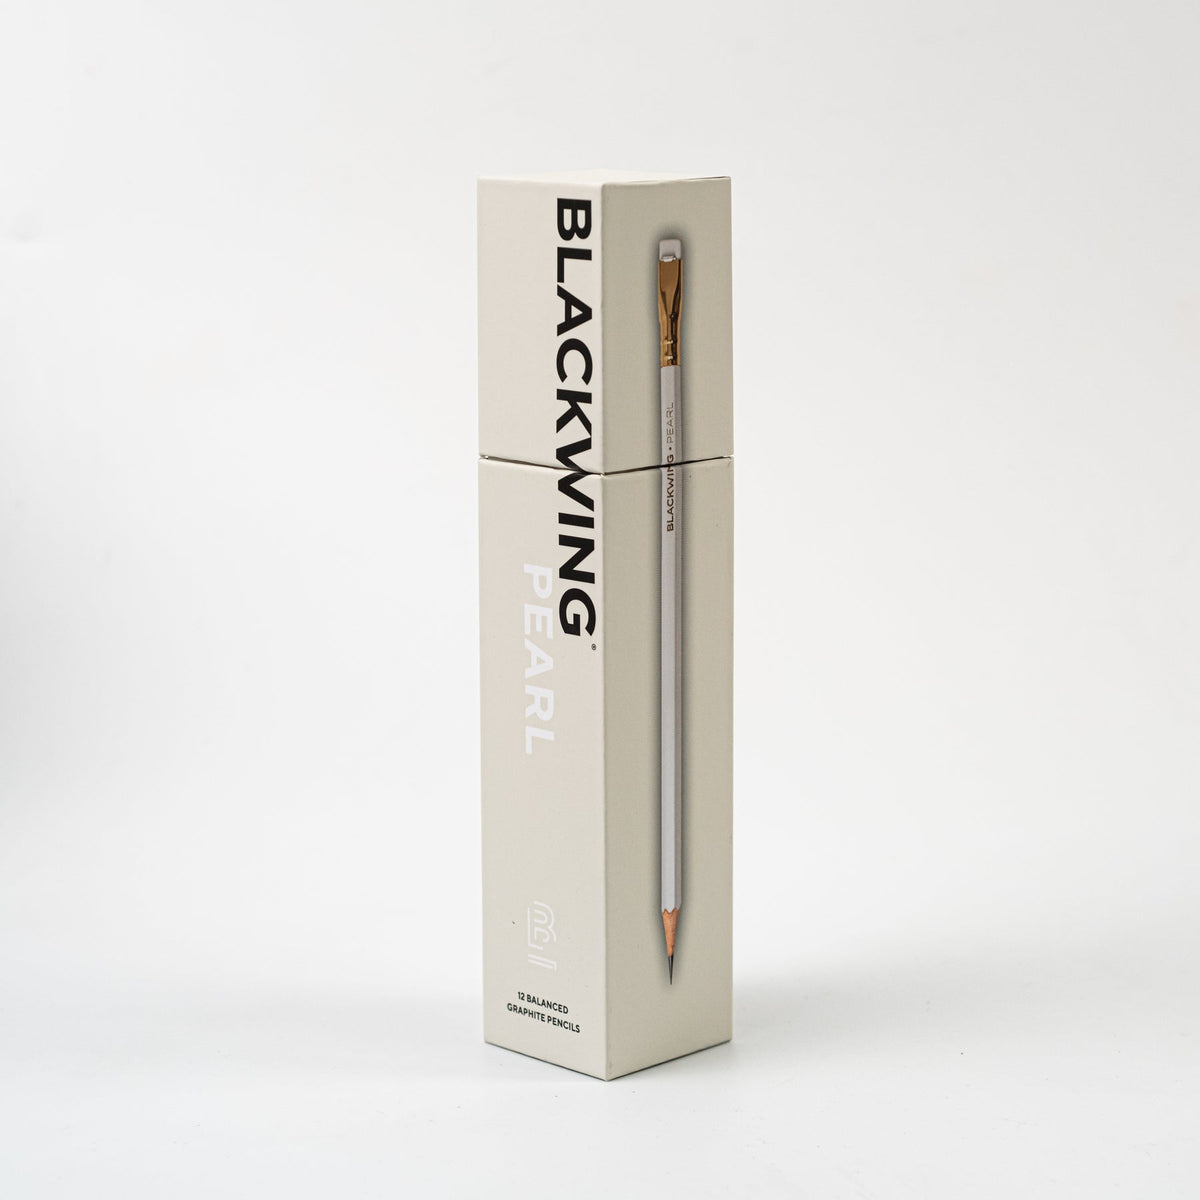 Blackwing, Blackwing Pearl Pencils, Medium Balanced Graphite, - Placewares